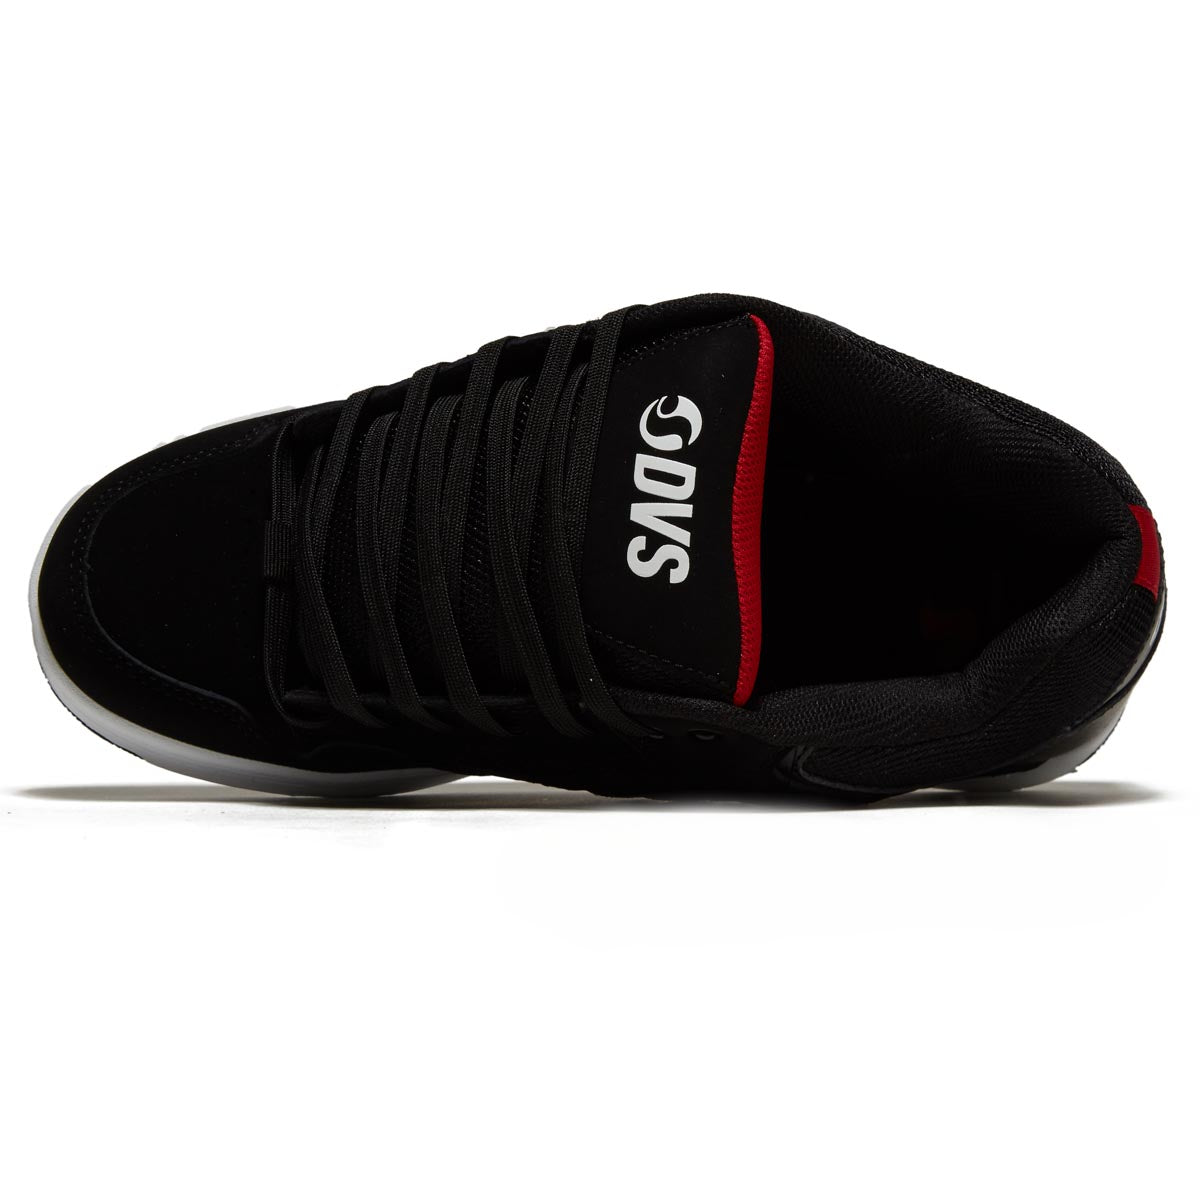 DVS Enduro 125 Shoes - Black/White/Red Nubuck/Lutzka image 3